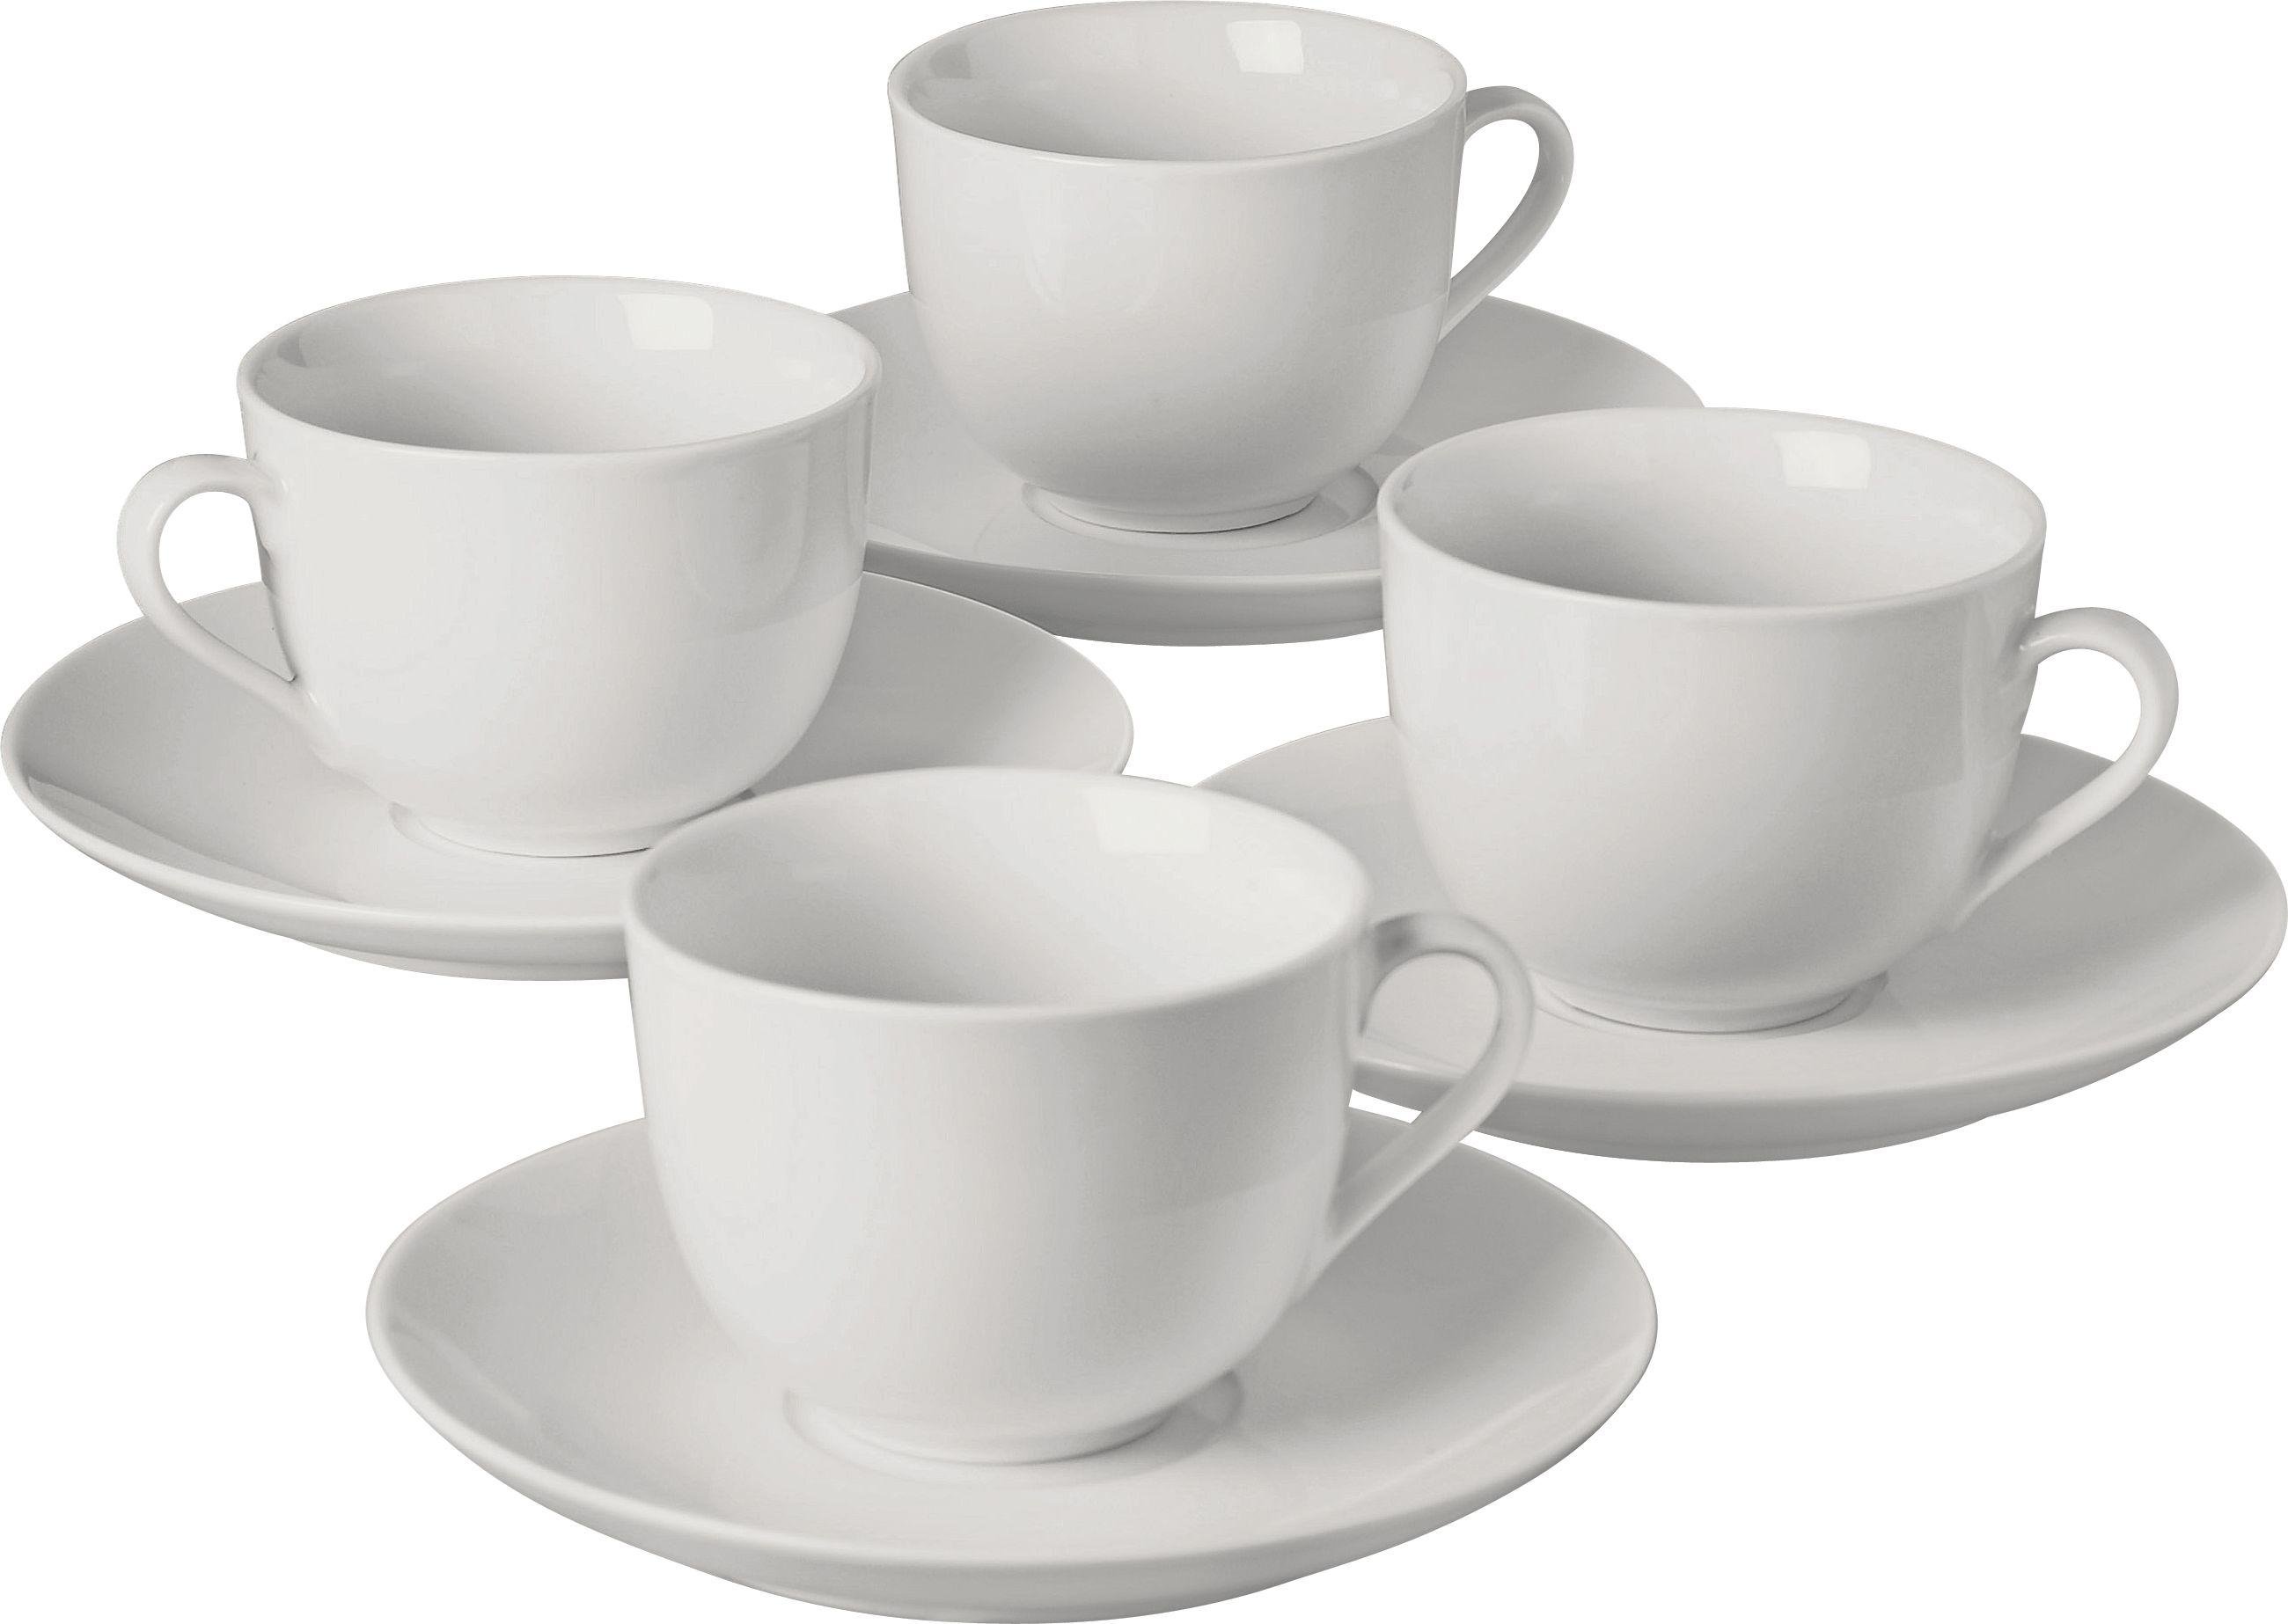 HOME 4 Piece Porcelain Tea Cup and Saucer Set White